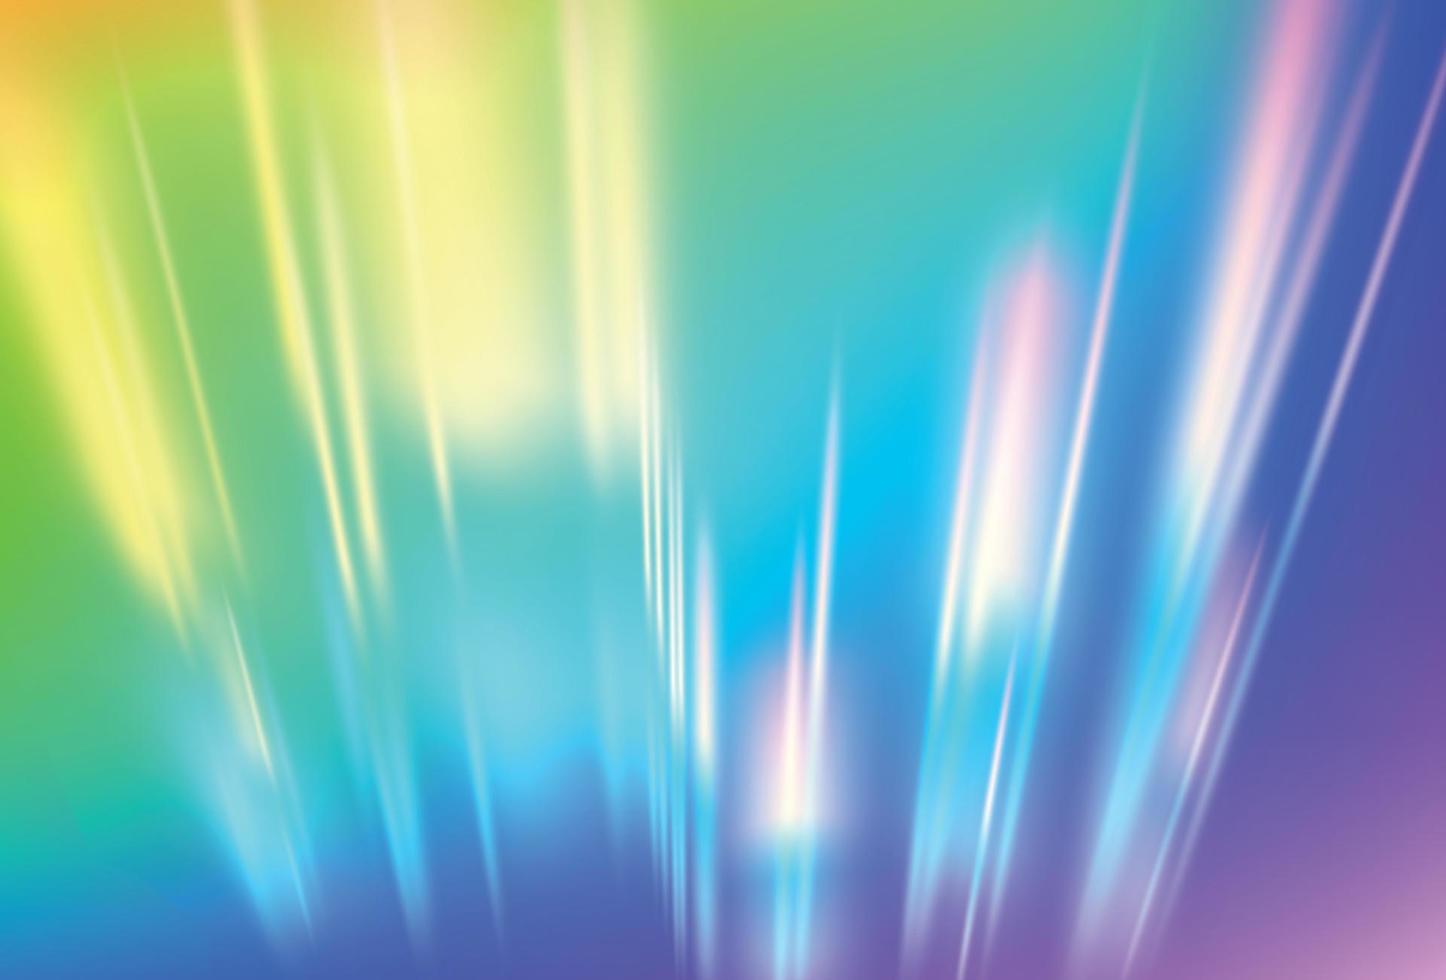 Prism backdrop. Rainbow lights background. vector